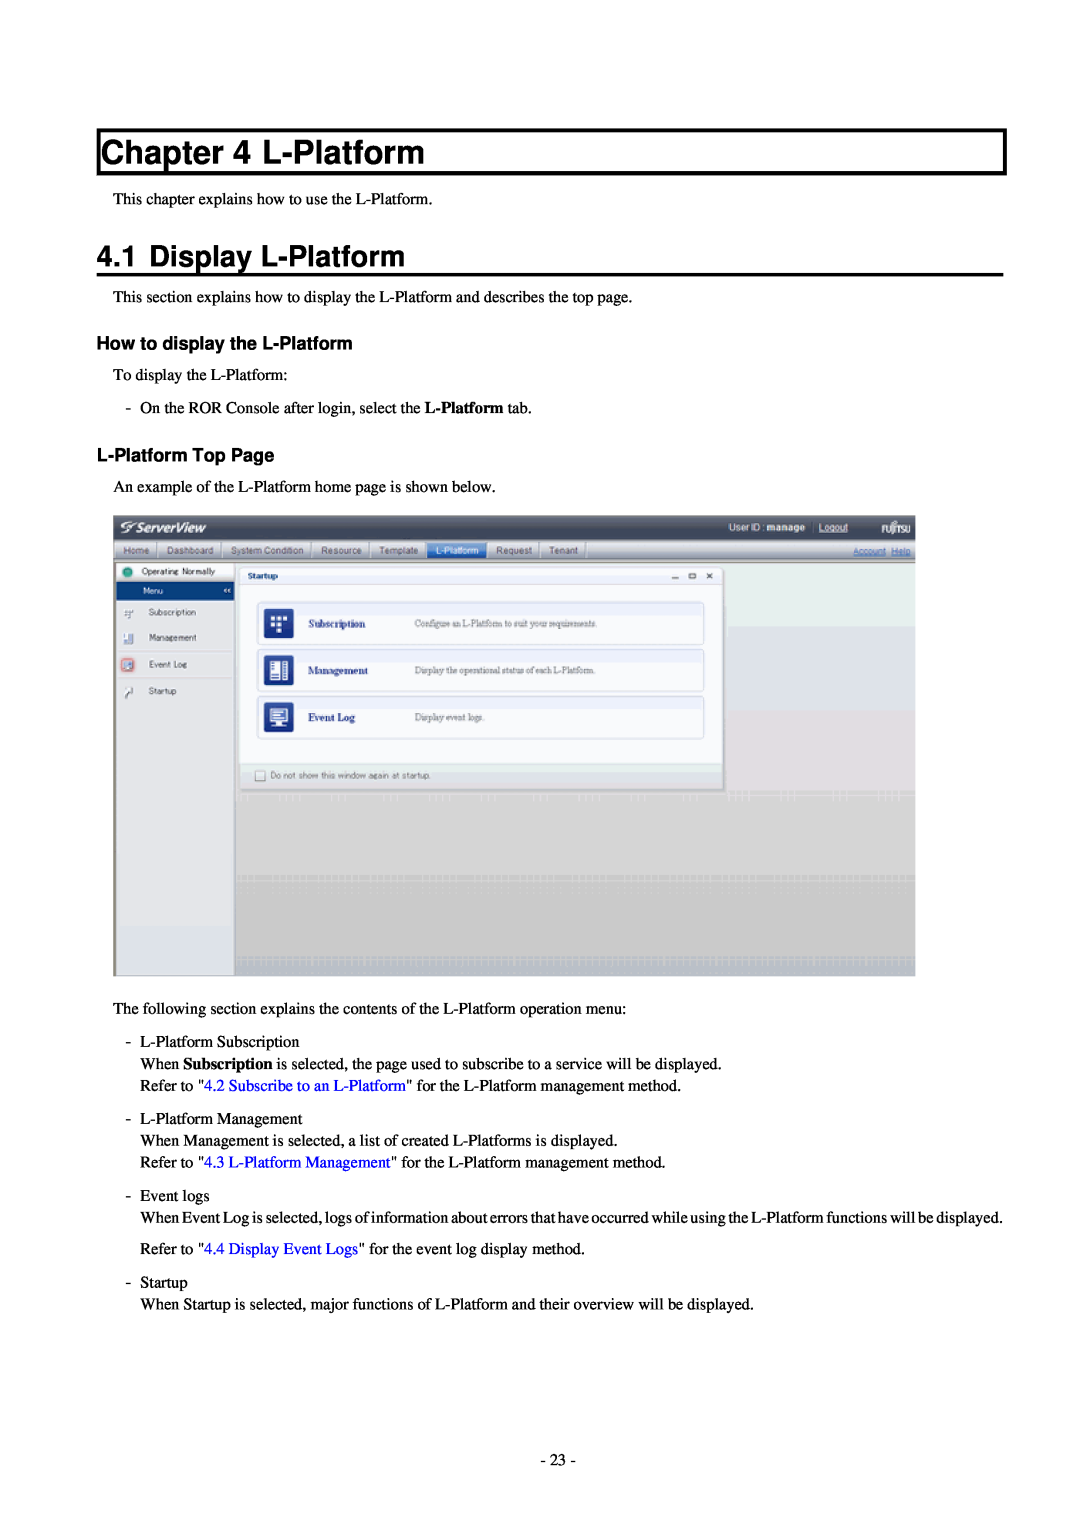 Fujitsu V3.0.0 manual Display L-Platform, How to display the L-Platform, L-Platform Top Page 